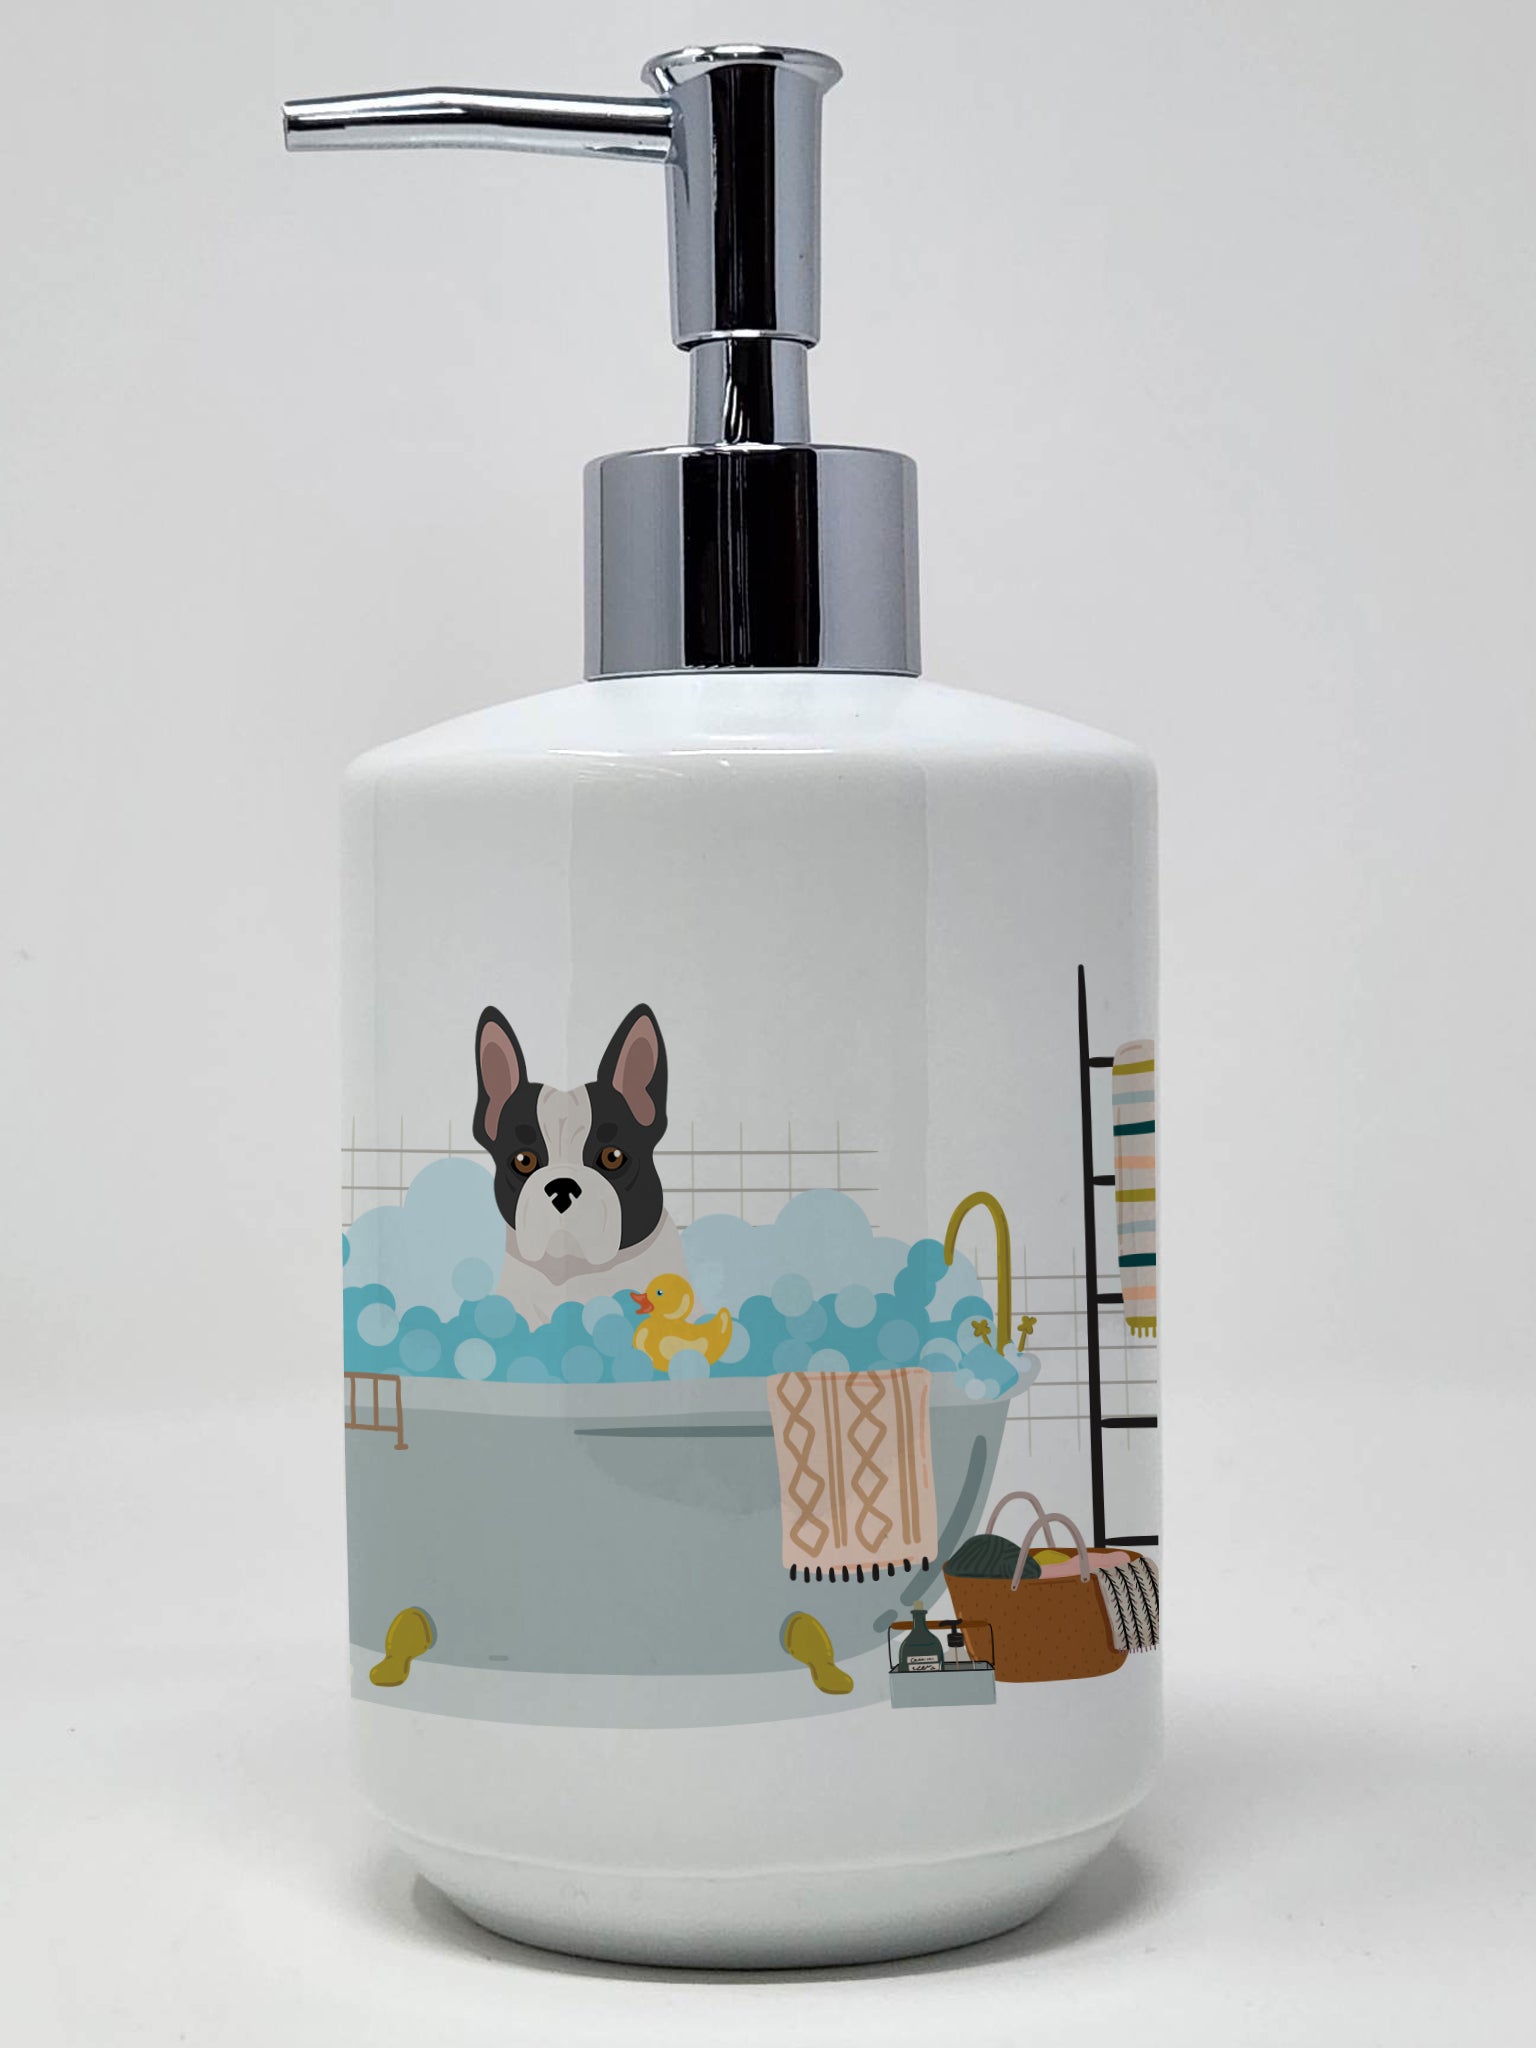 Buy this Black and White French Bulldog Ceramic Soap Dispenser